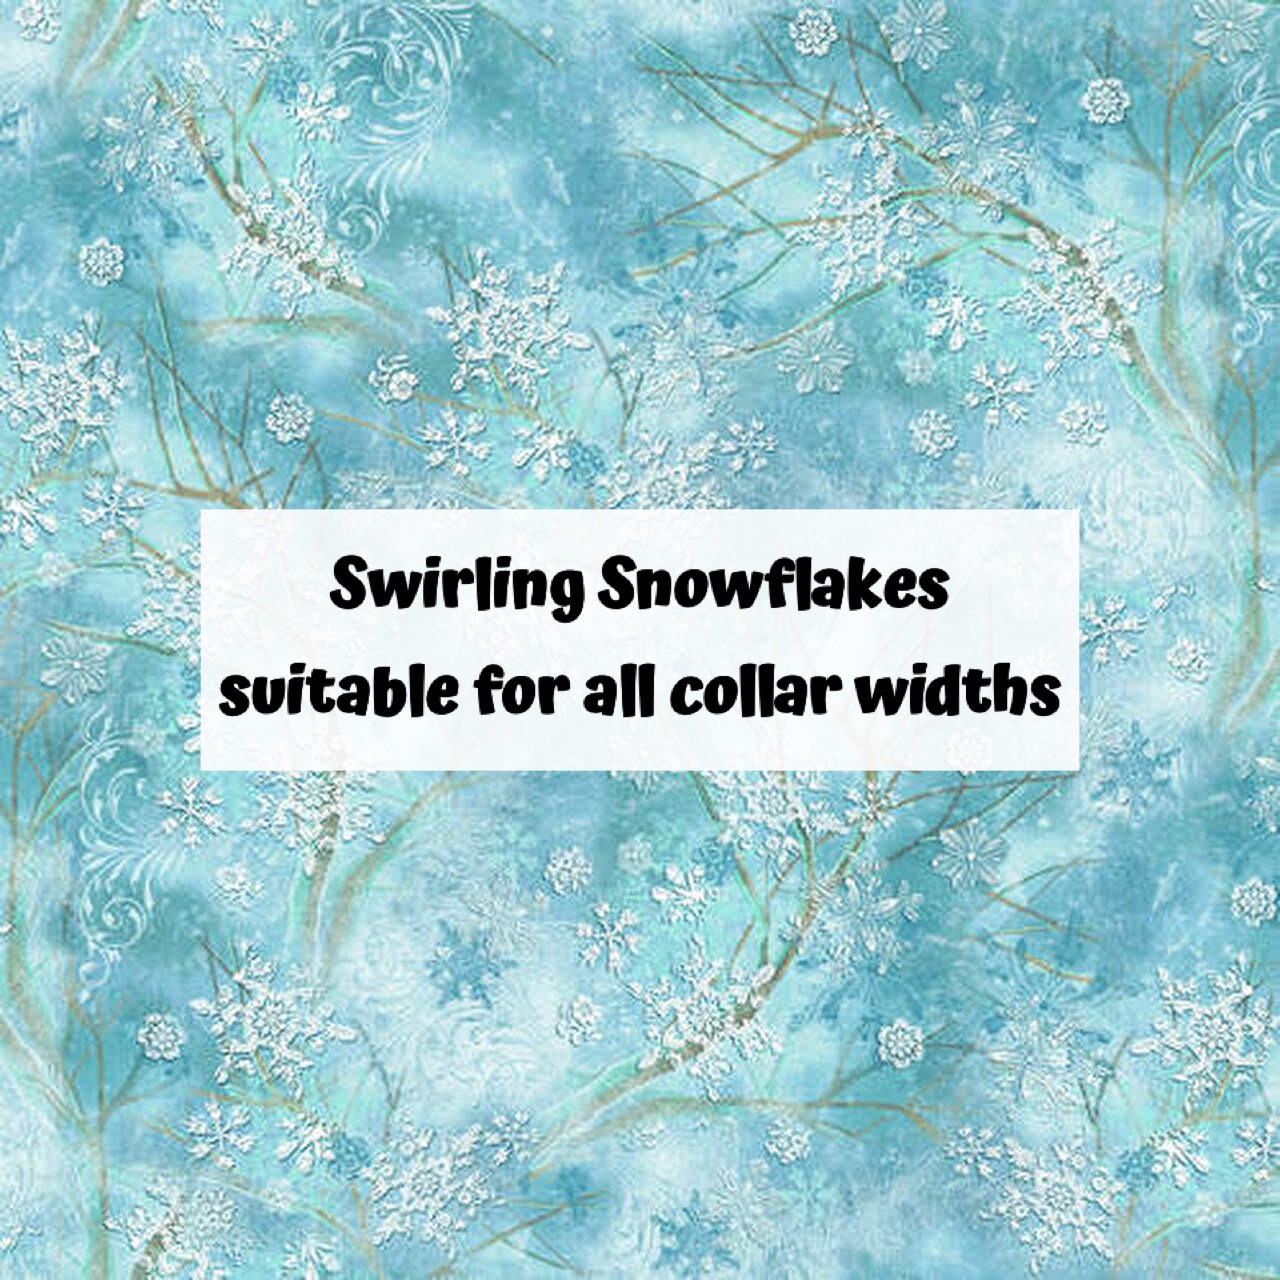 Swirling Snowflakes